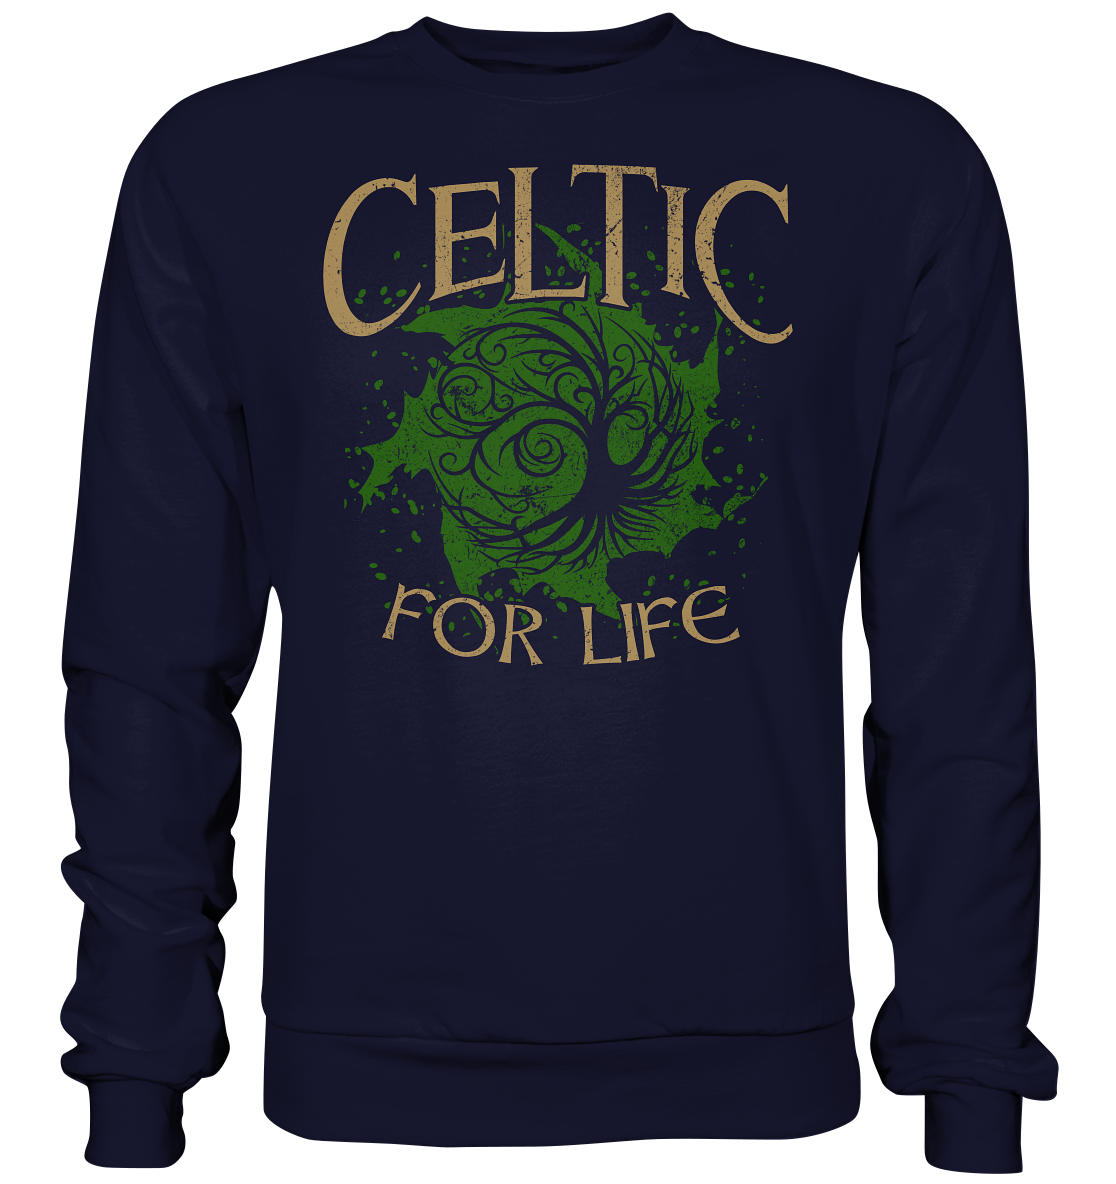 Celtic "For Life" - Basic Sweatshirt